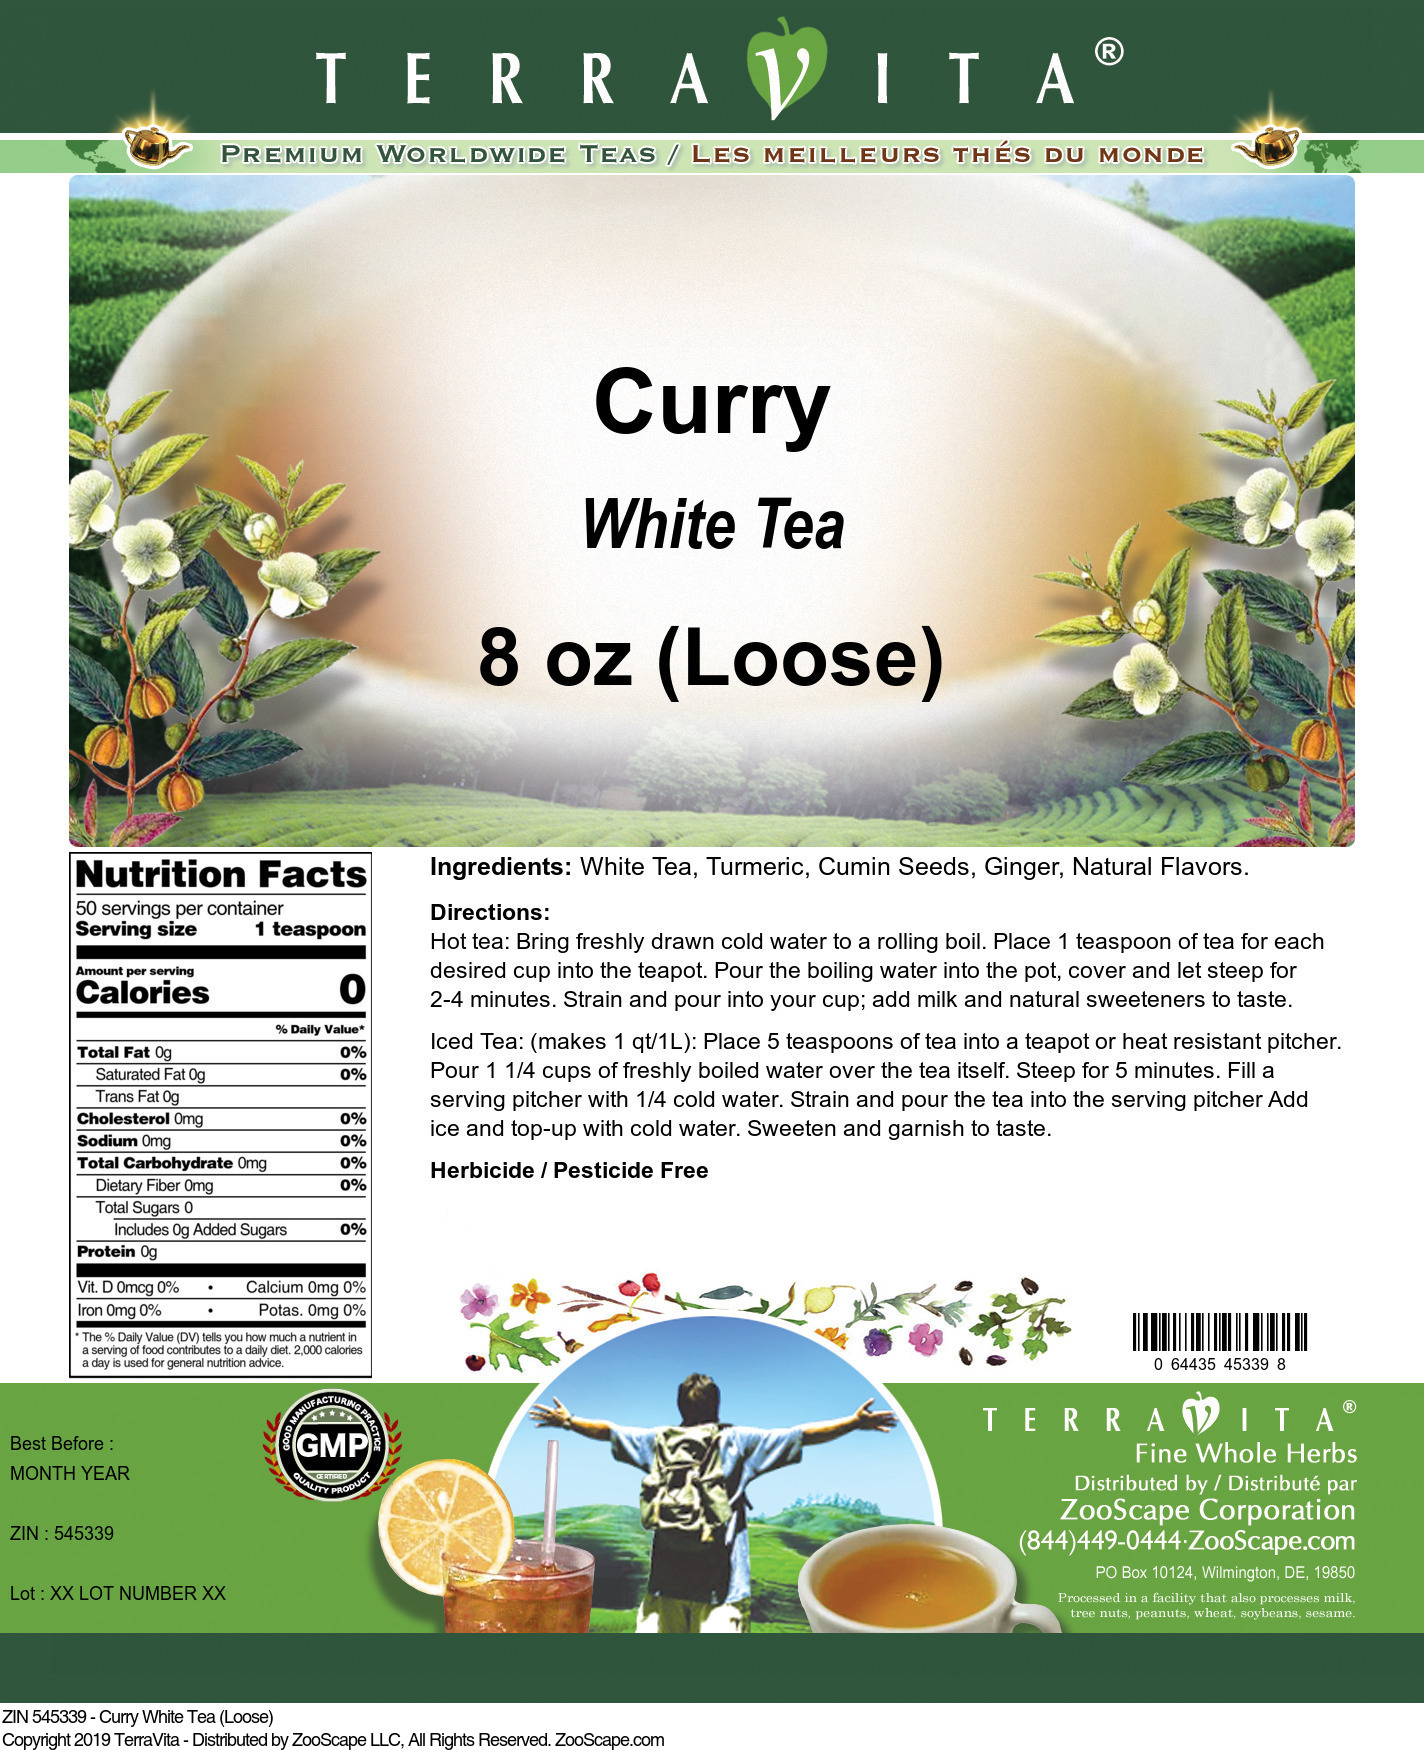 Curry White Tea (Loose) - Label